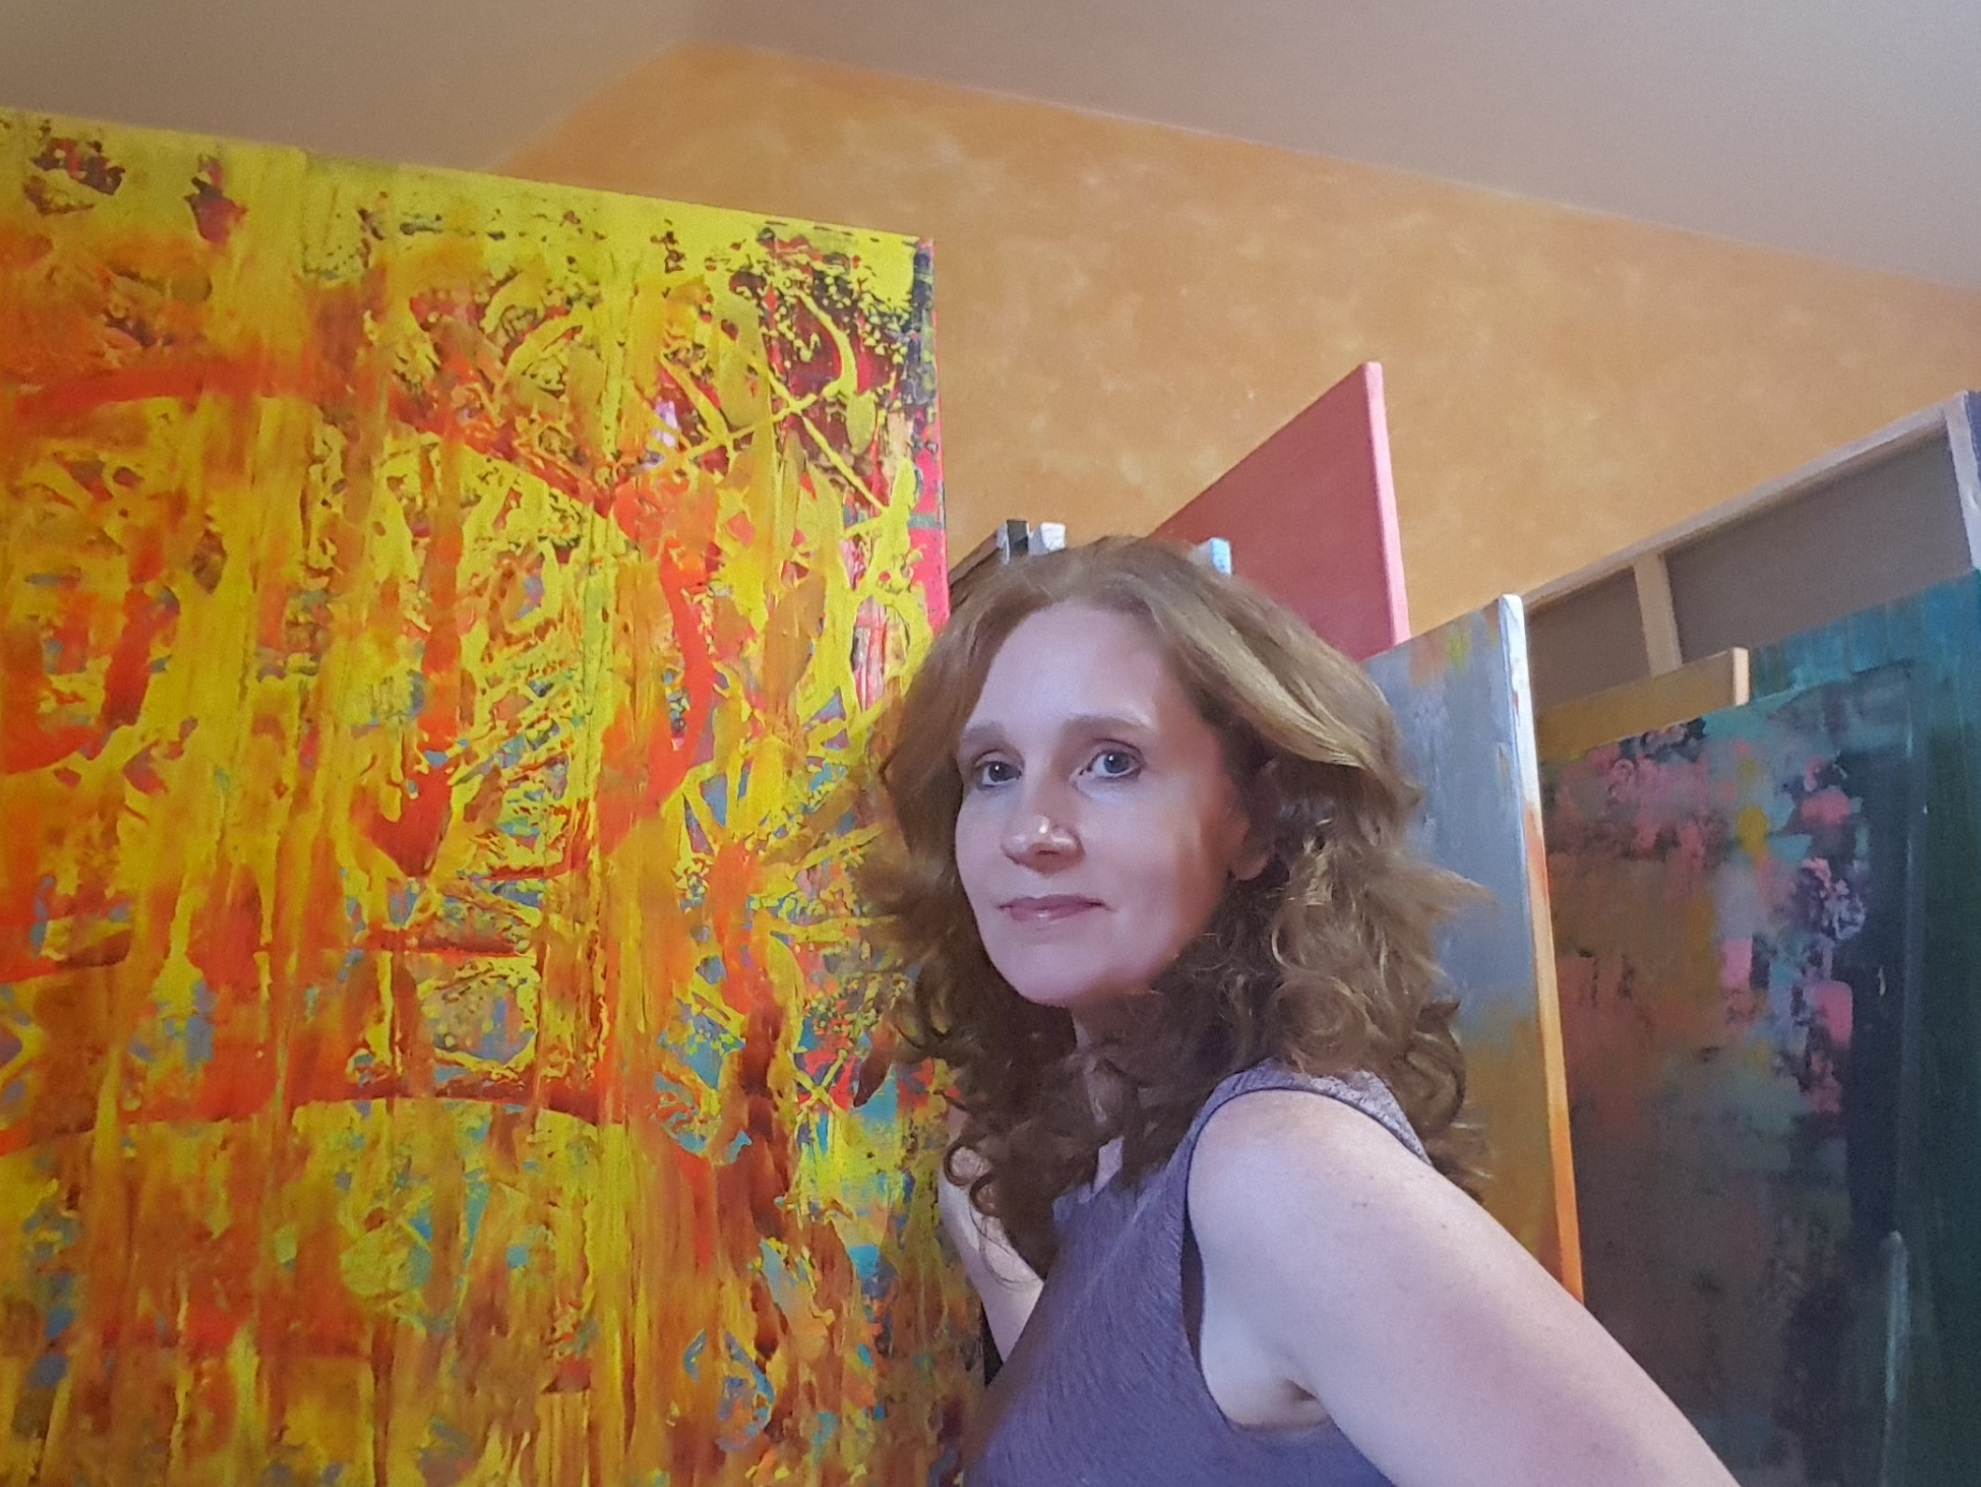 ivana olbricht, slovak artist, in the studio